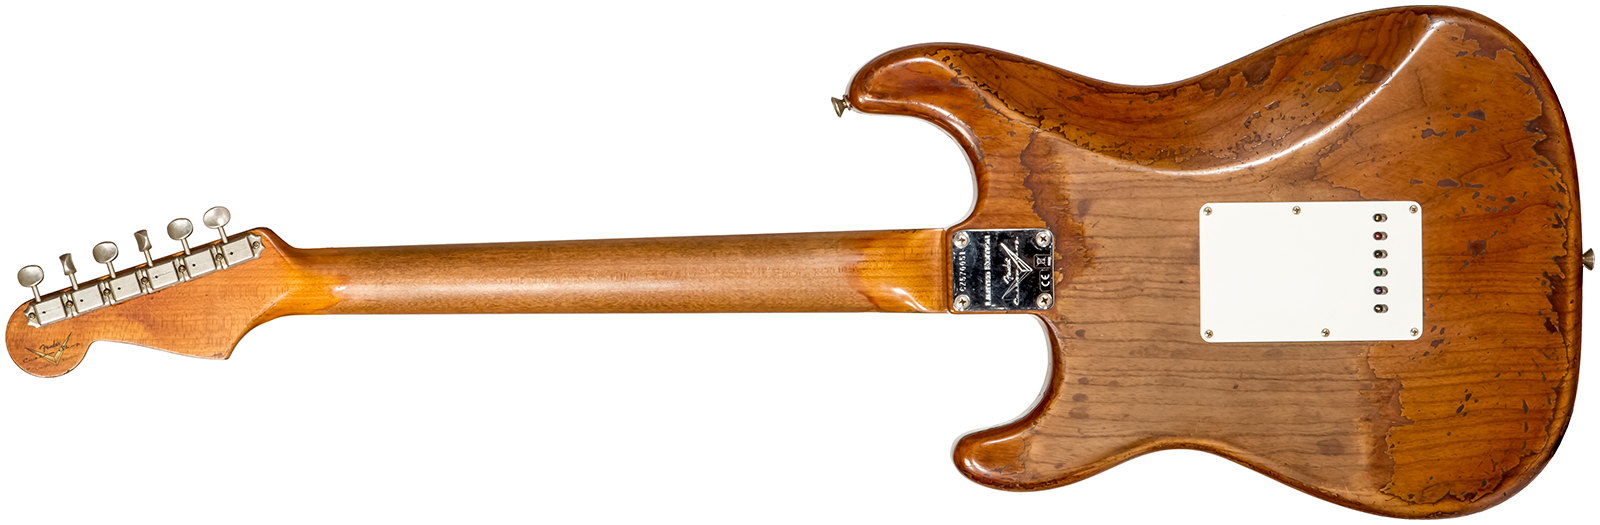 Fender Custom Shop Strat 1961 3s Trem Rw #cz570051 - Super Heavy Relic Natural - E-Gitarre in Str-Form - Variation 1